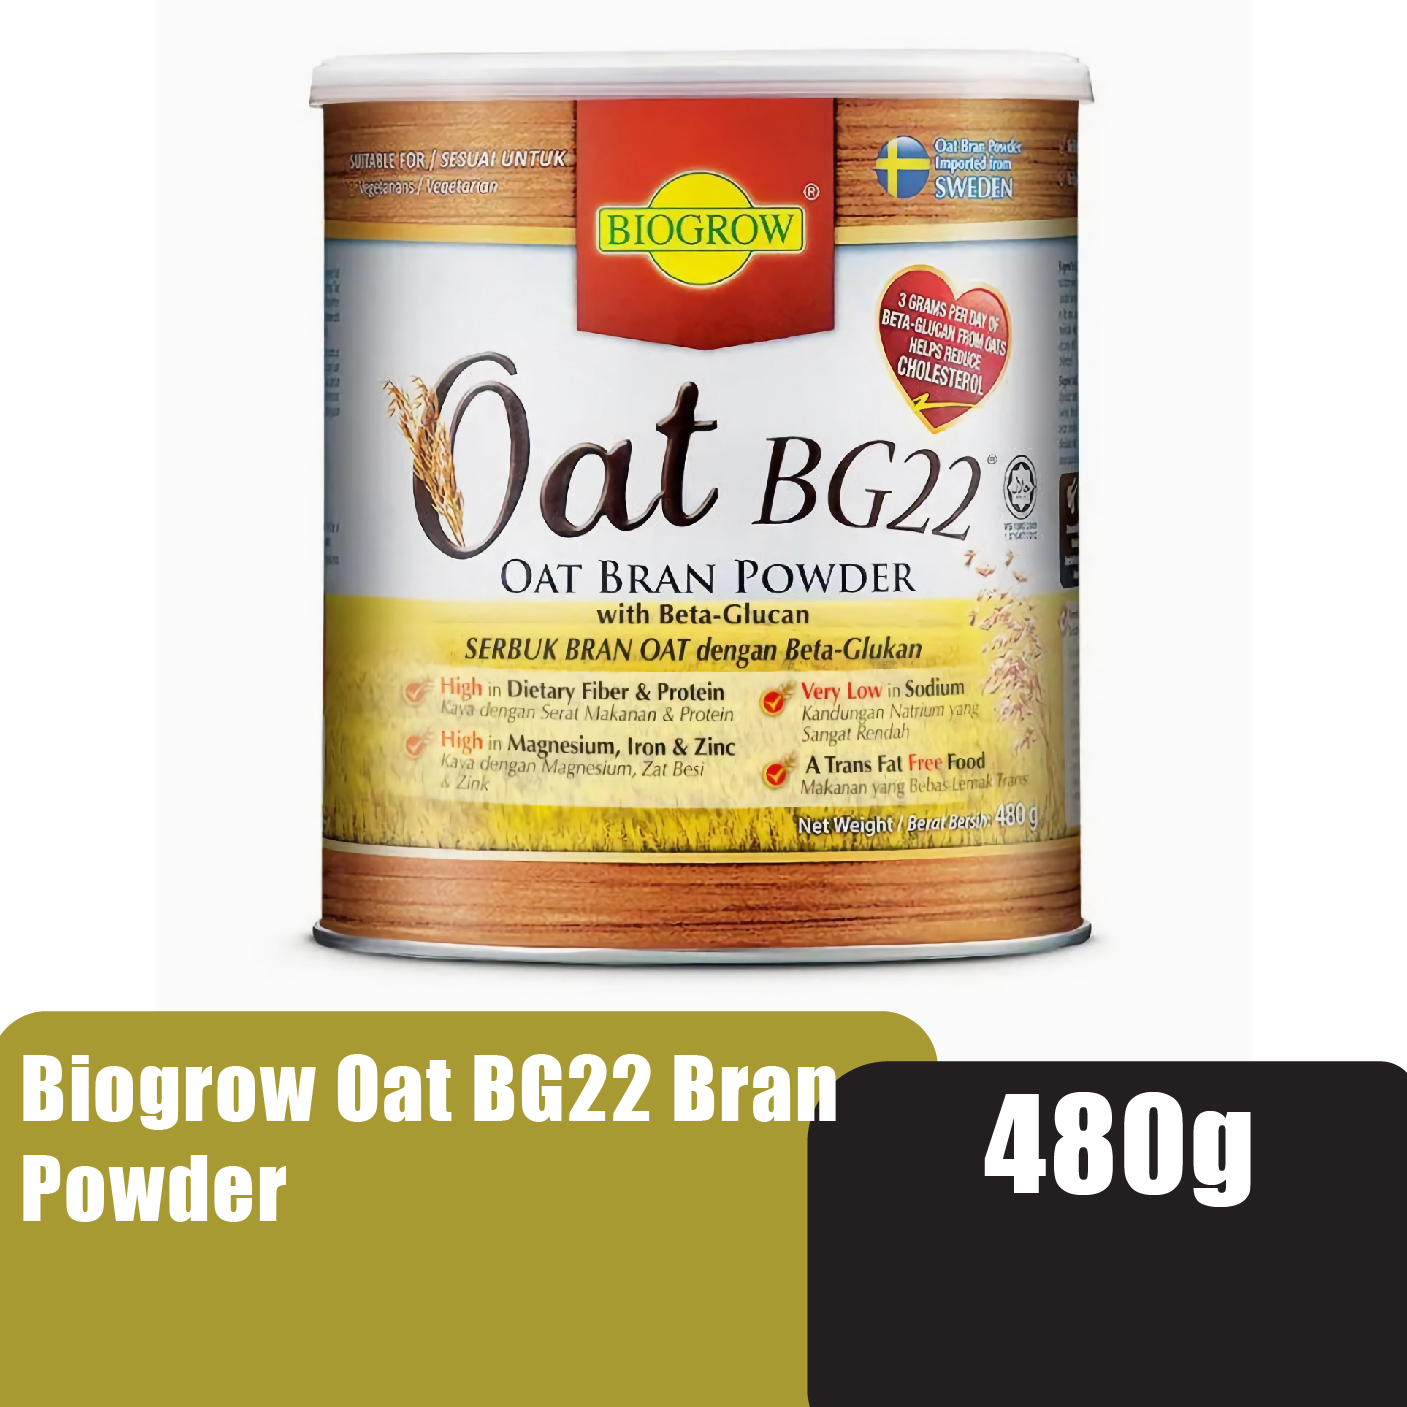 BIOGROW Bg22 Oat Bran Powder 480g - Oat Milk Powder For Maintaining Healthy Cholesterol & Blood Glucose Levels